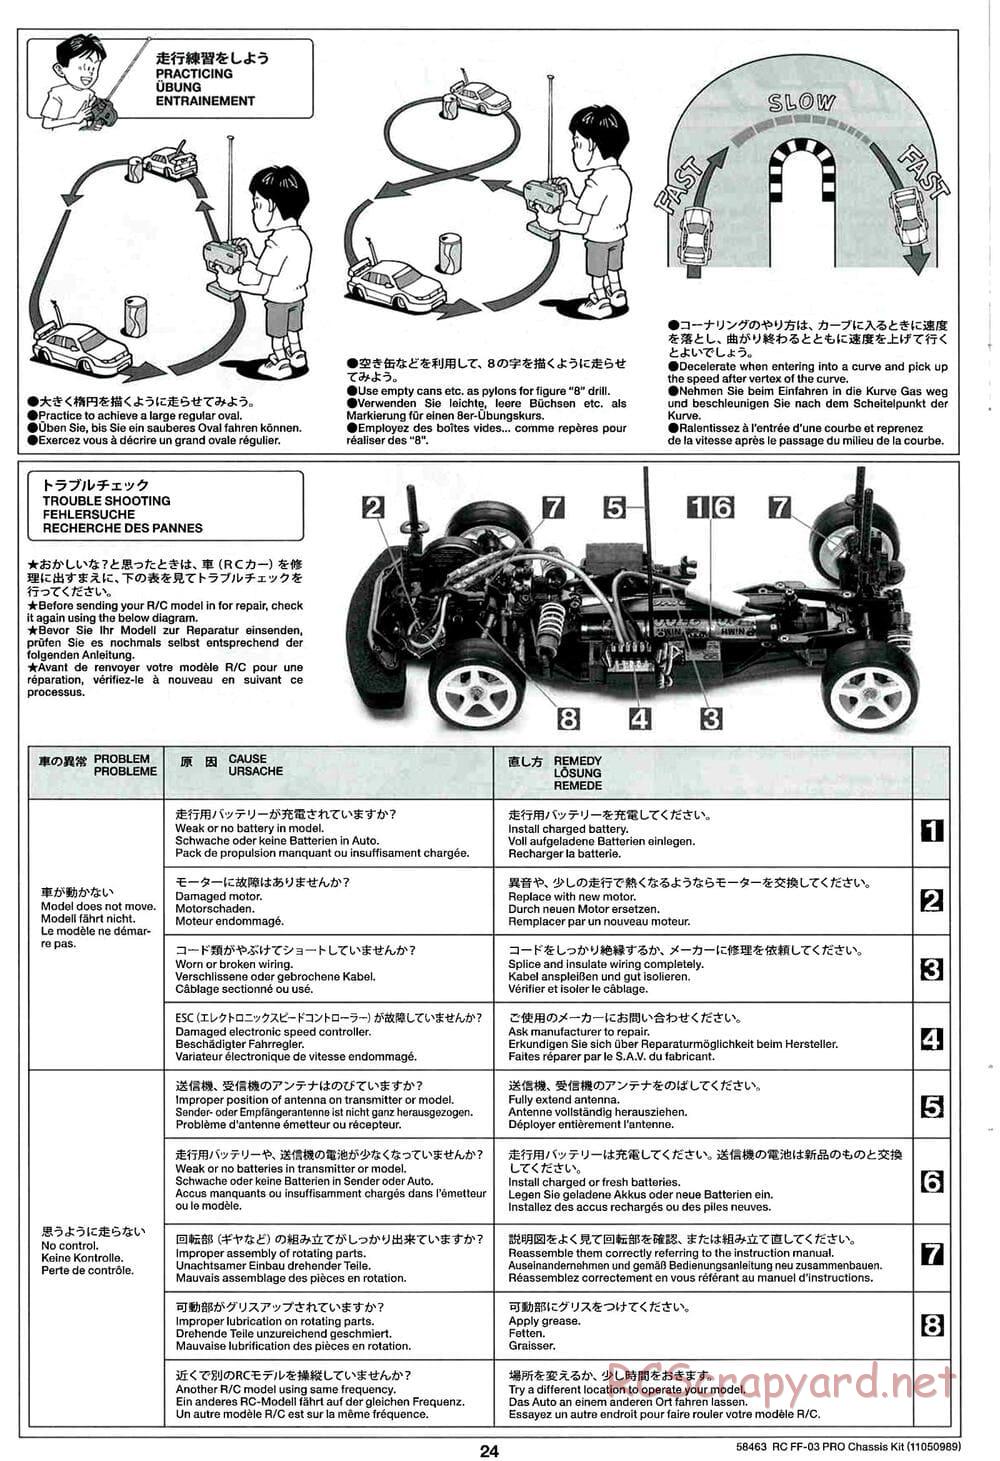 Tamiya - FF-03 Pro Chassis - Manual - Page 24